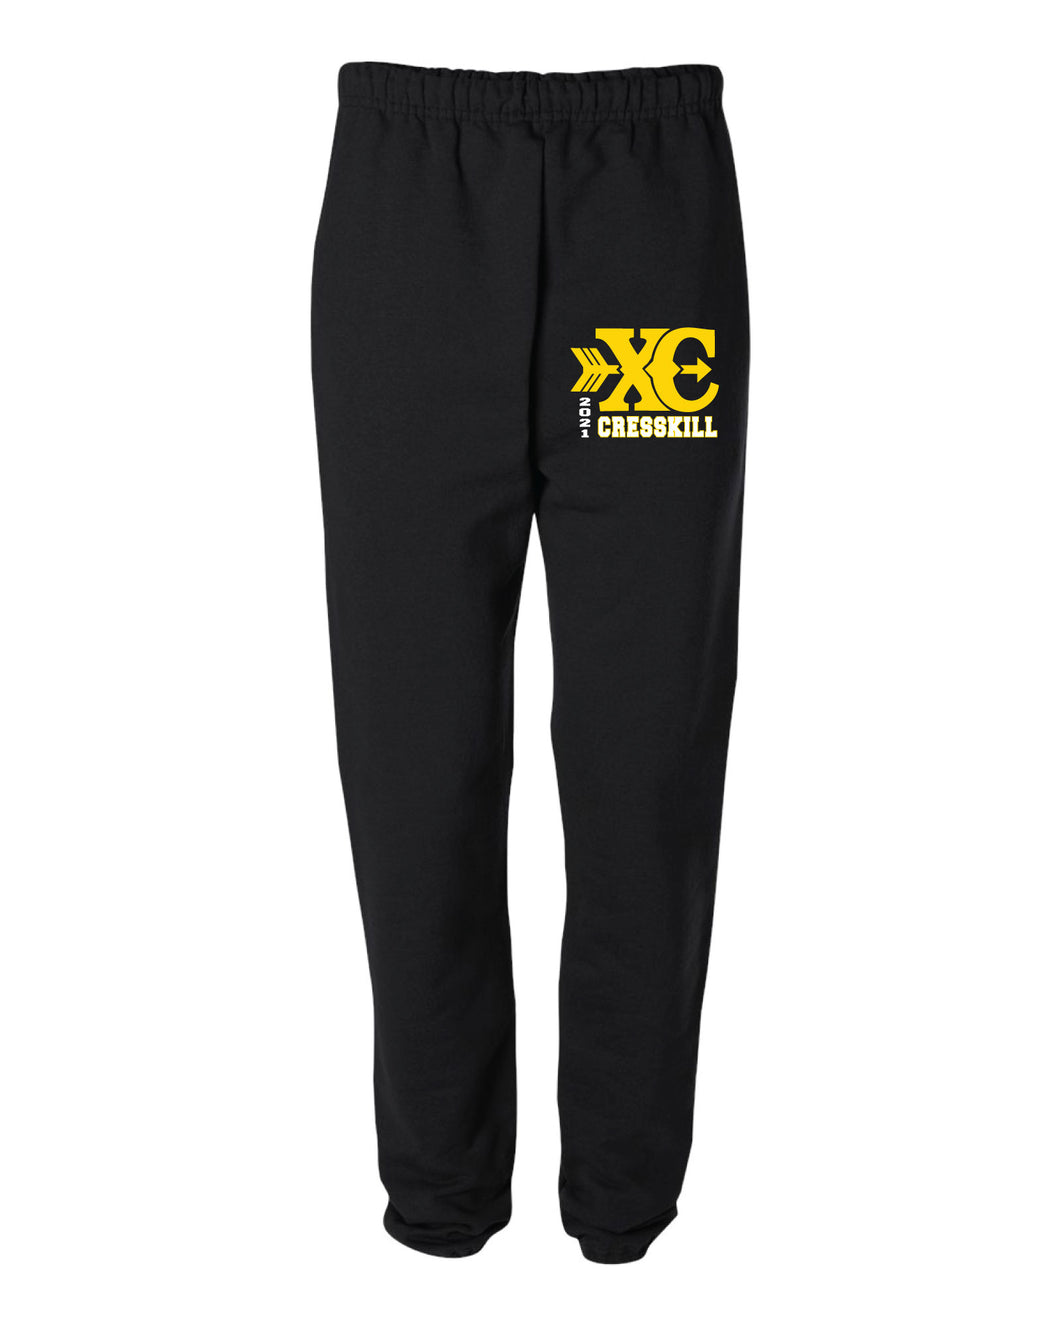 Cresskill XC Cotton Sweatpants - Black - 5KounT